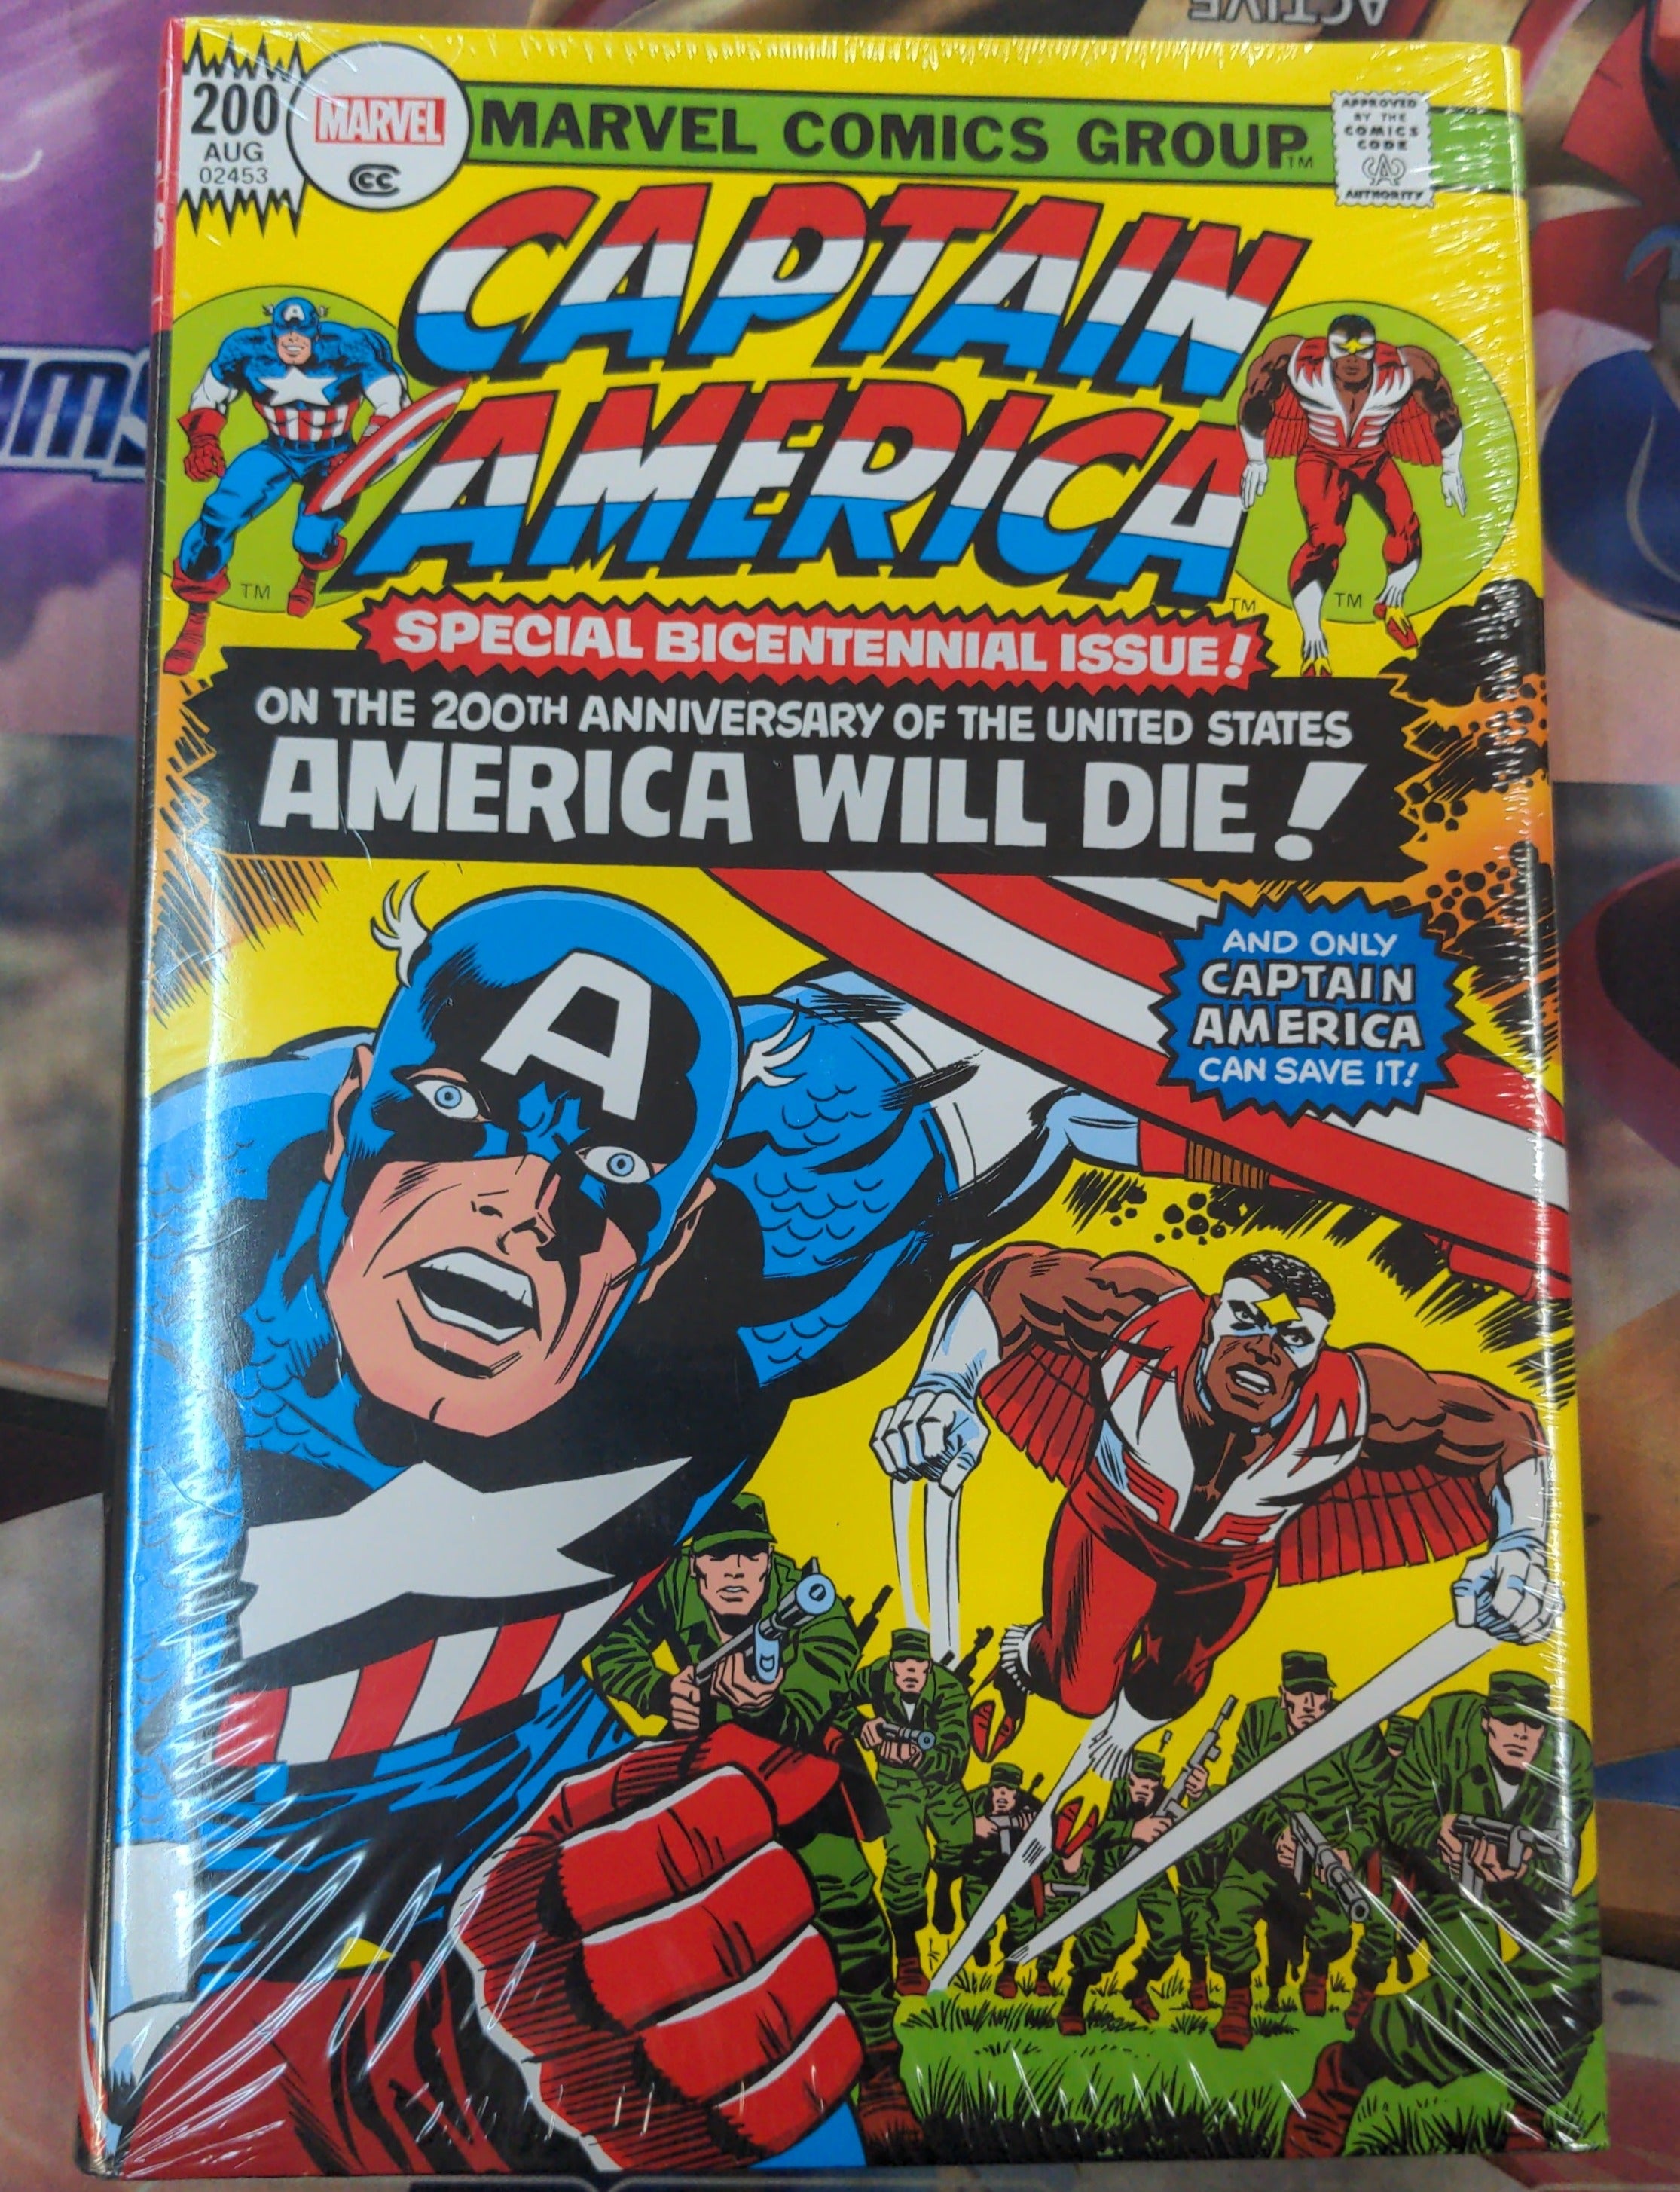 Captain America By Jack Kirby Omnibus Couverture rigide Nouvelle variante du marché direct d'impression | BD Cosmos